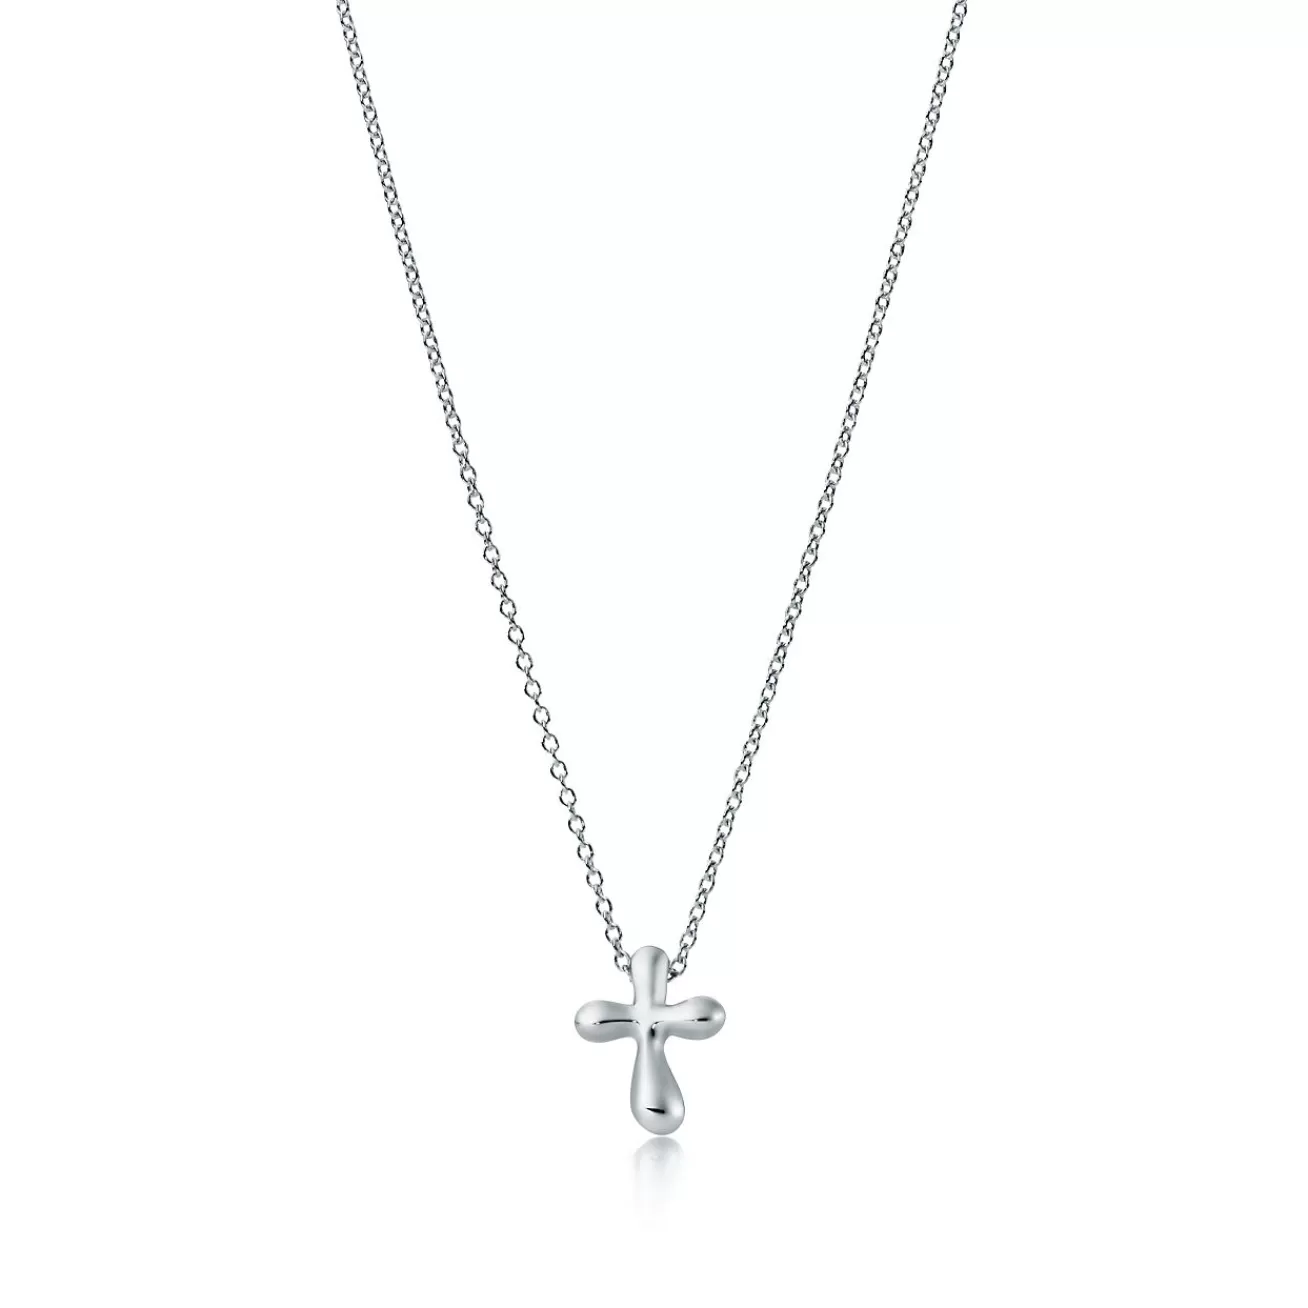 Tiffany & Co. Elsa Peretti® cross pendant in sterling silver, 12 mm long. | ^ Necklaces & Pendants | Sterling Silver Jewelry